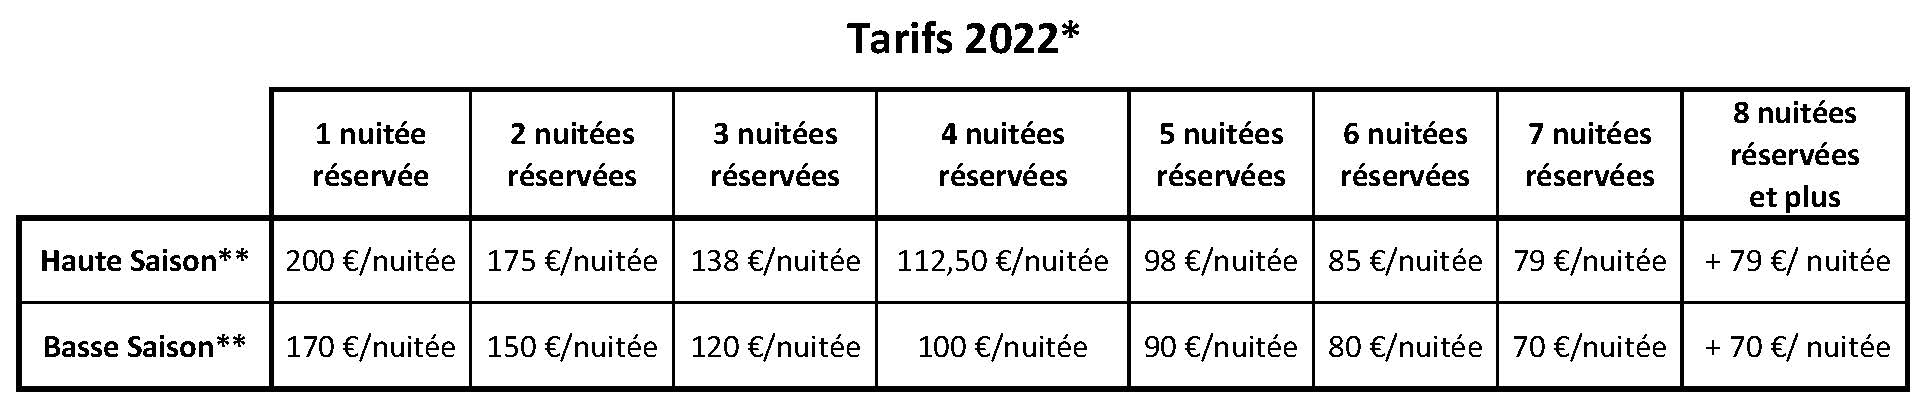 Tarifs Chez Liliane 2022